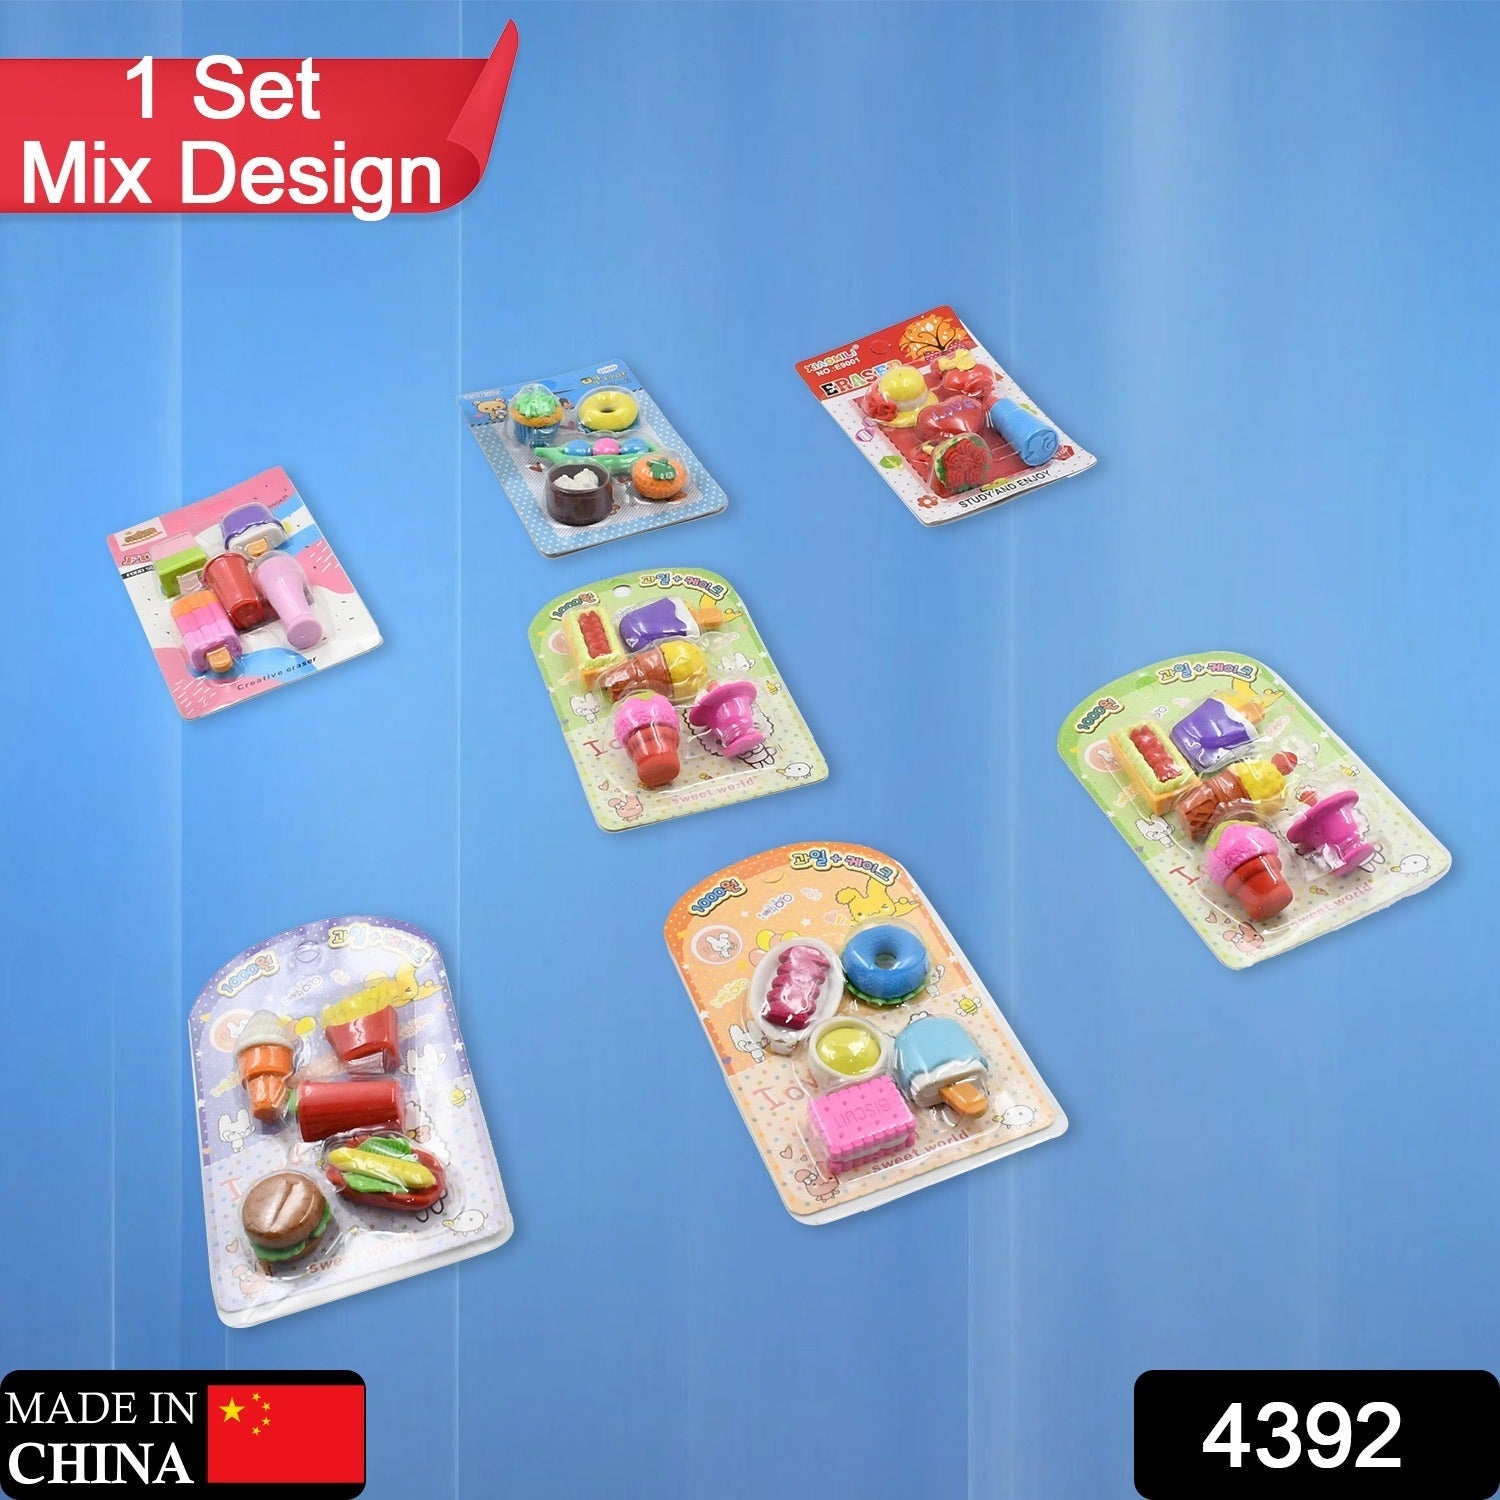 4392 Mix Design 1Set Fancy & Stylish Colorful Erasers for Children Different Designs & Mix, Eraser Set for Return Gift, Birthday Party, School Prize (1Set, 5Pc)